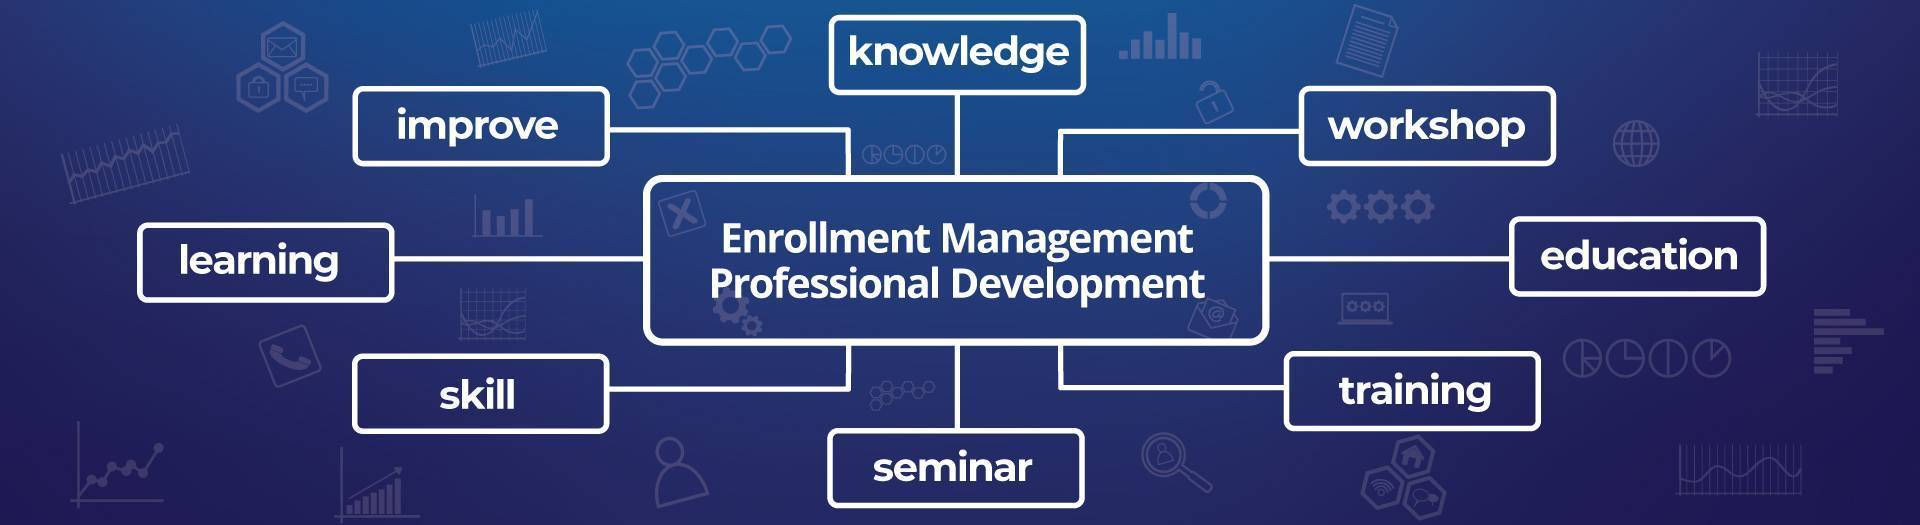 EM Professional Development, knowledge, workshop, education, training, seminar, skill, learning, improve